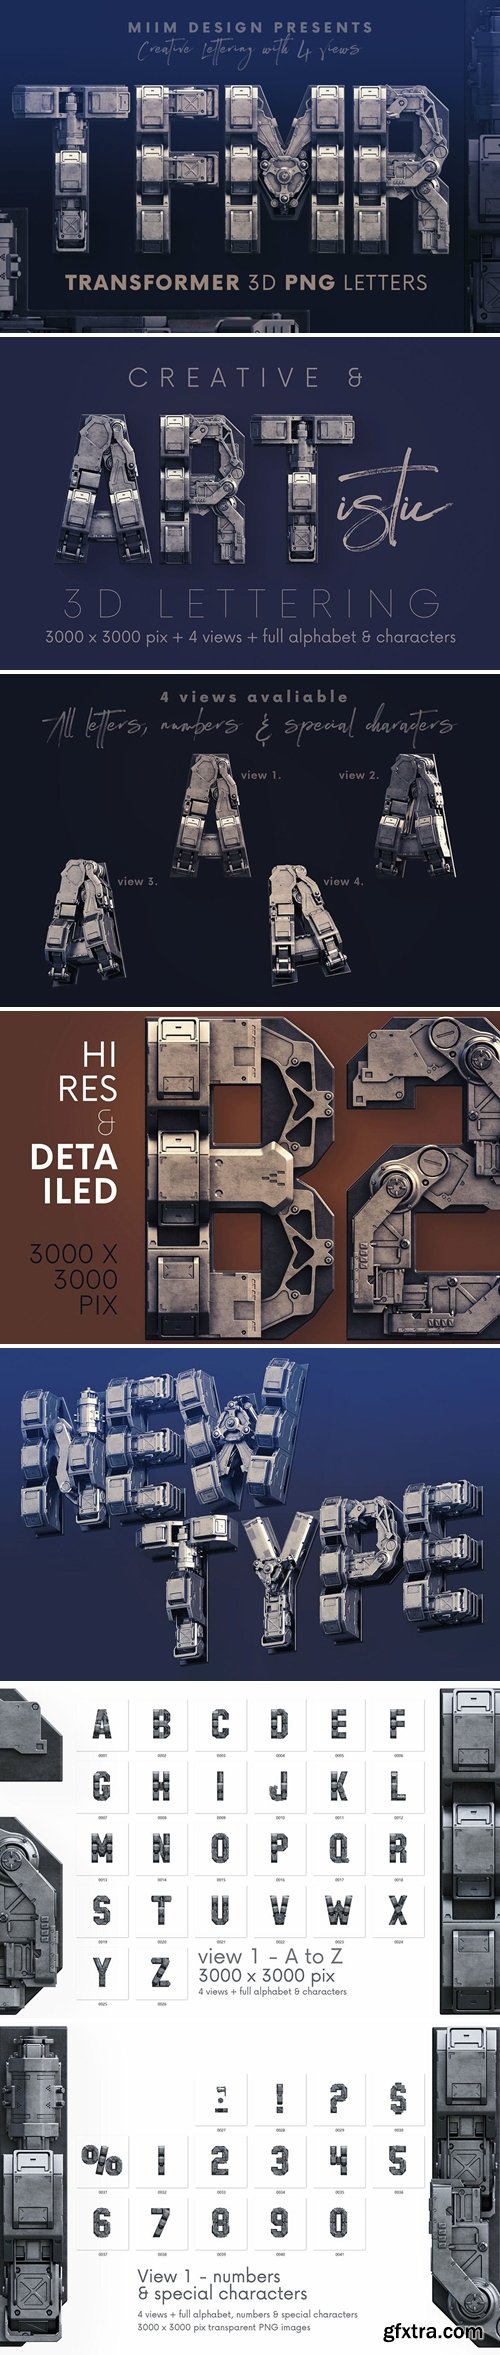 Transformer - 3D Lettering